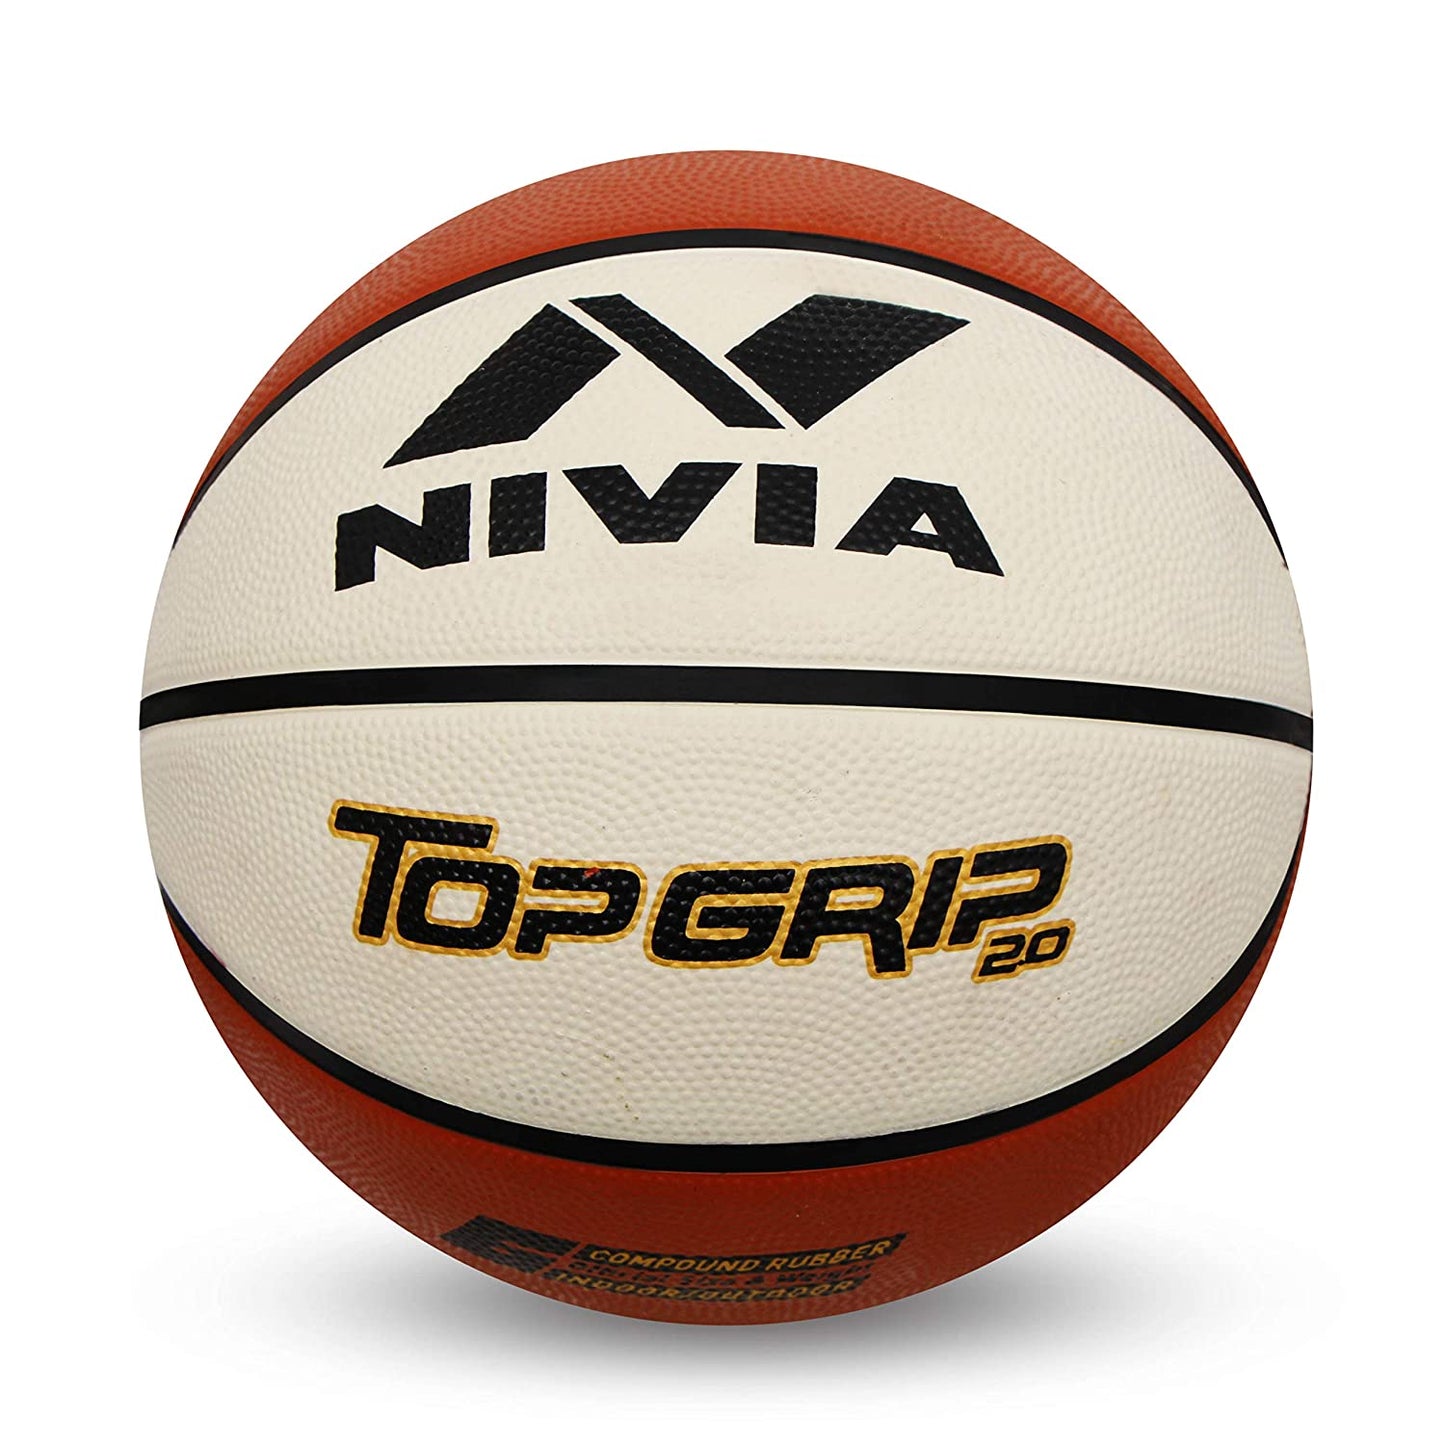 Nivia 1119 Top Grid 2.0 Rubber Basketball, Size 7 (White/Brown) - Best Price online Prokicksports.com